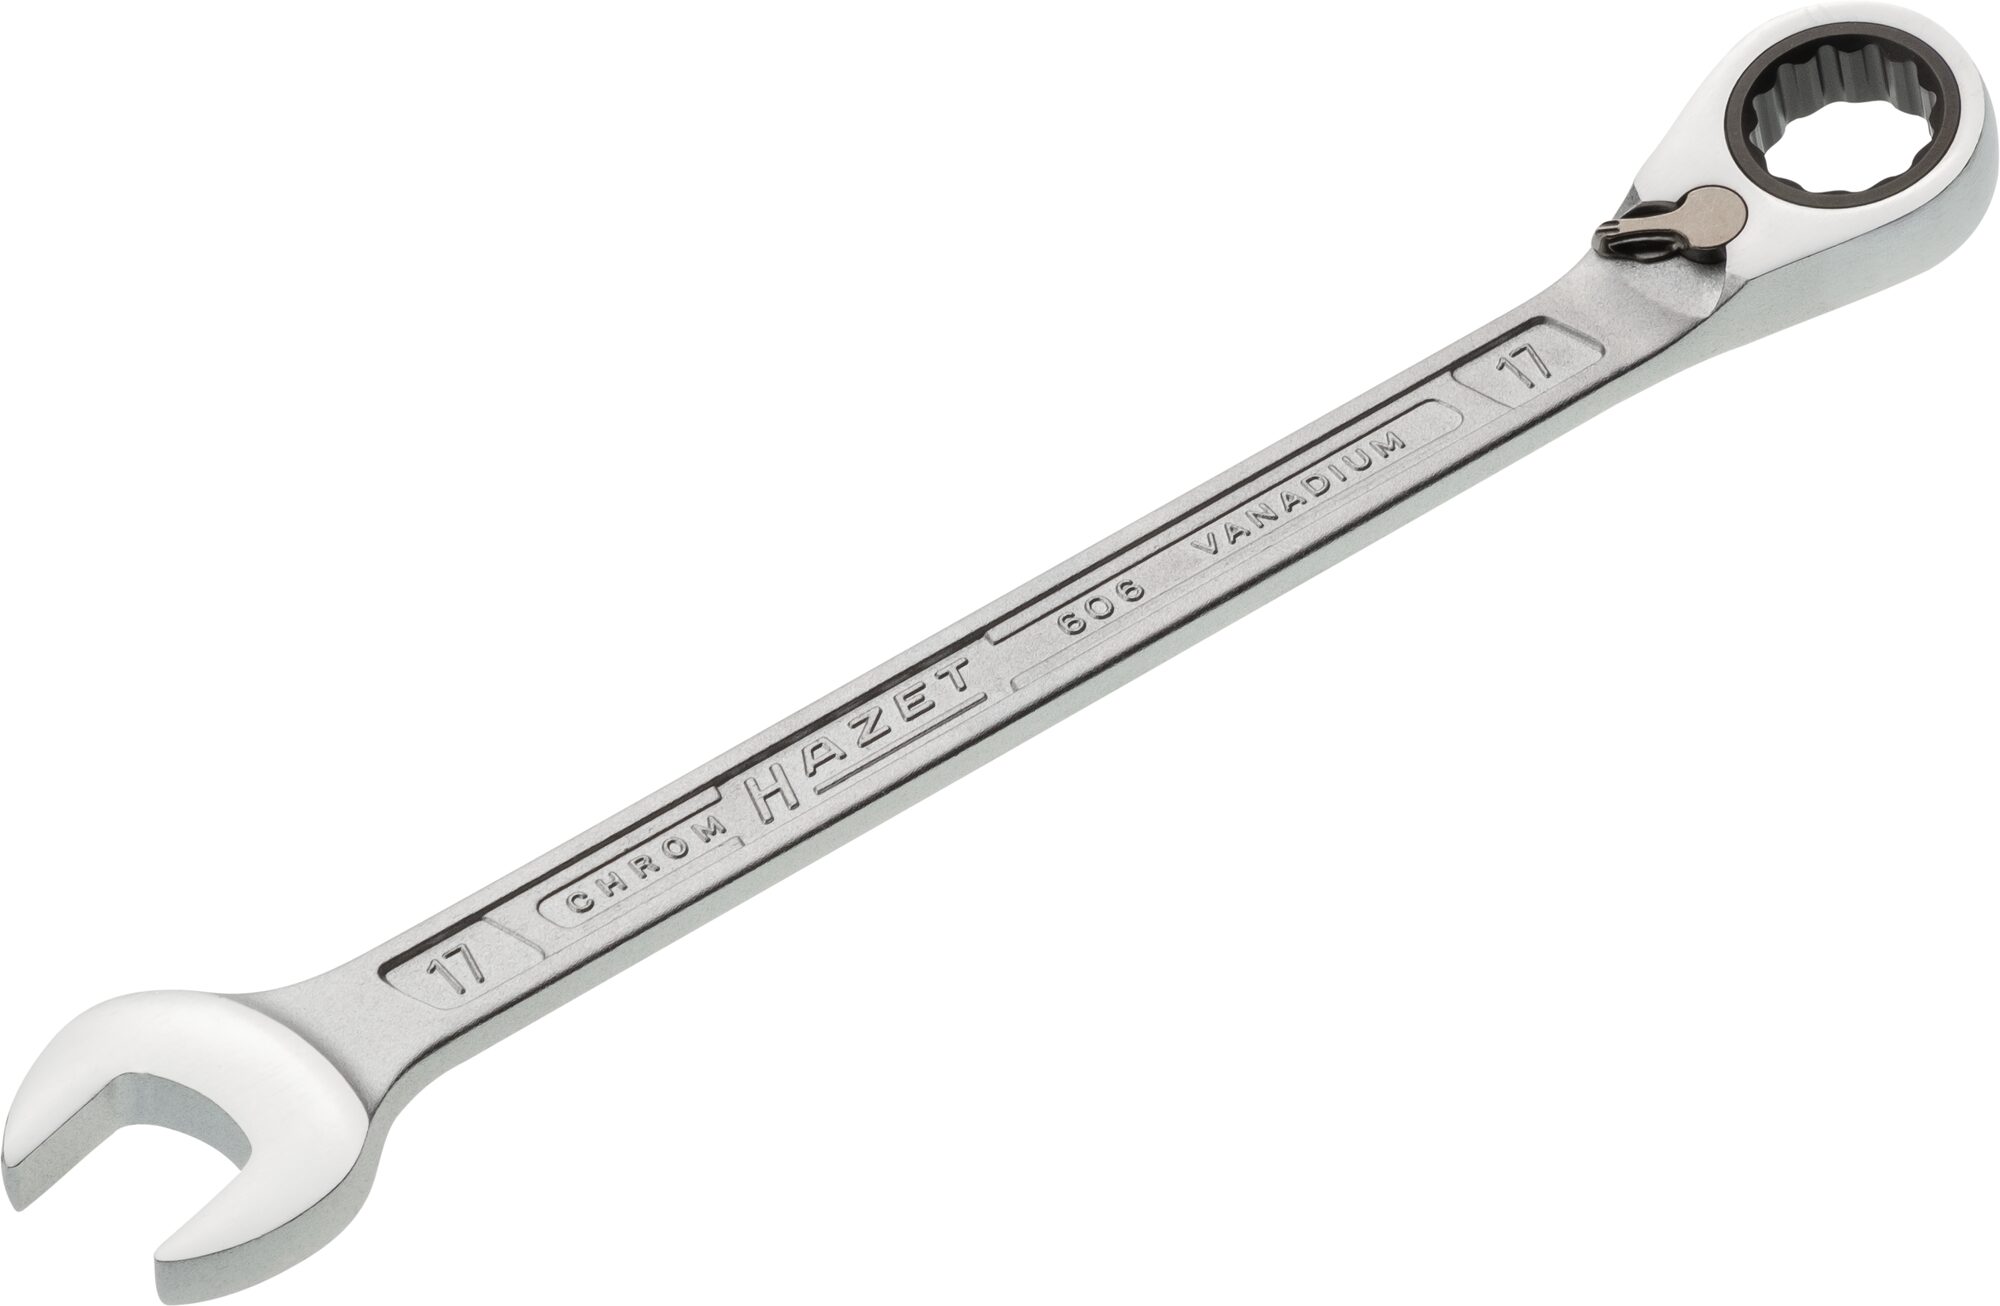 HAZET Knarren Ring-Maulschlüssel 606-17 · Außen Doppel-Sechskant-Tractionsprofil · 17 mm